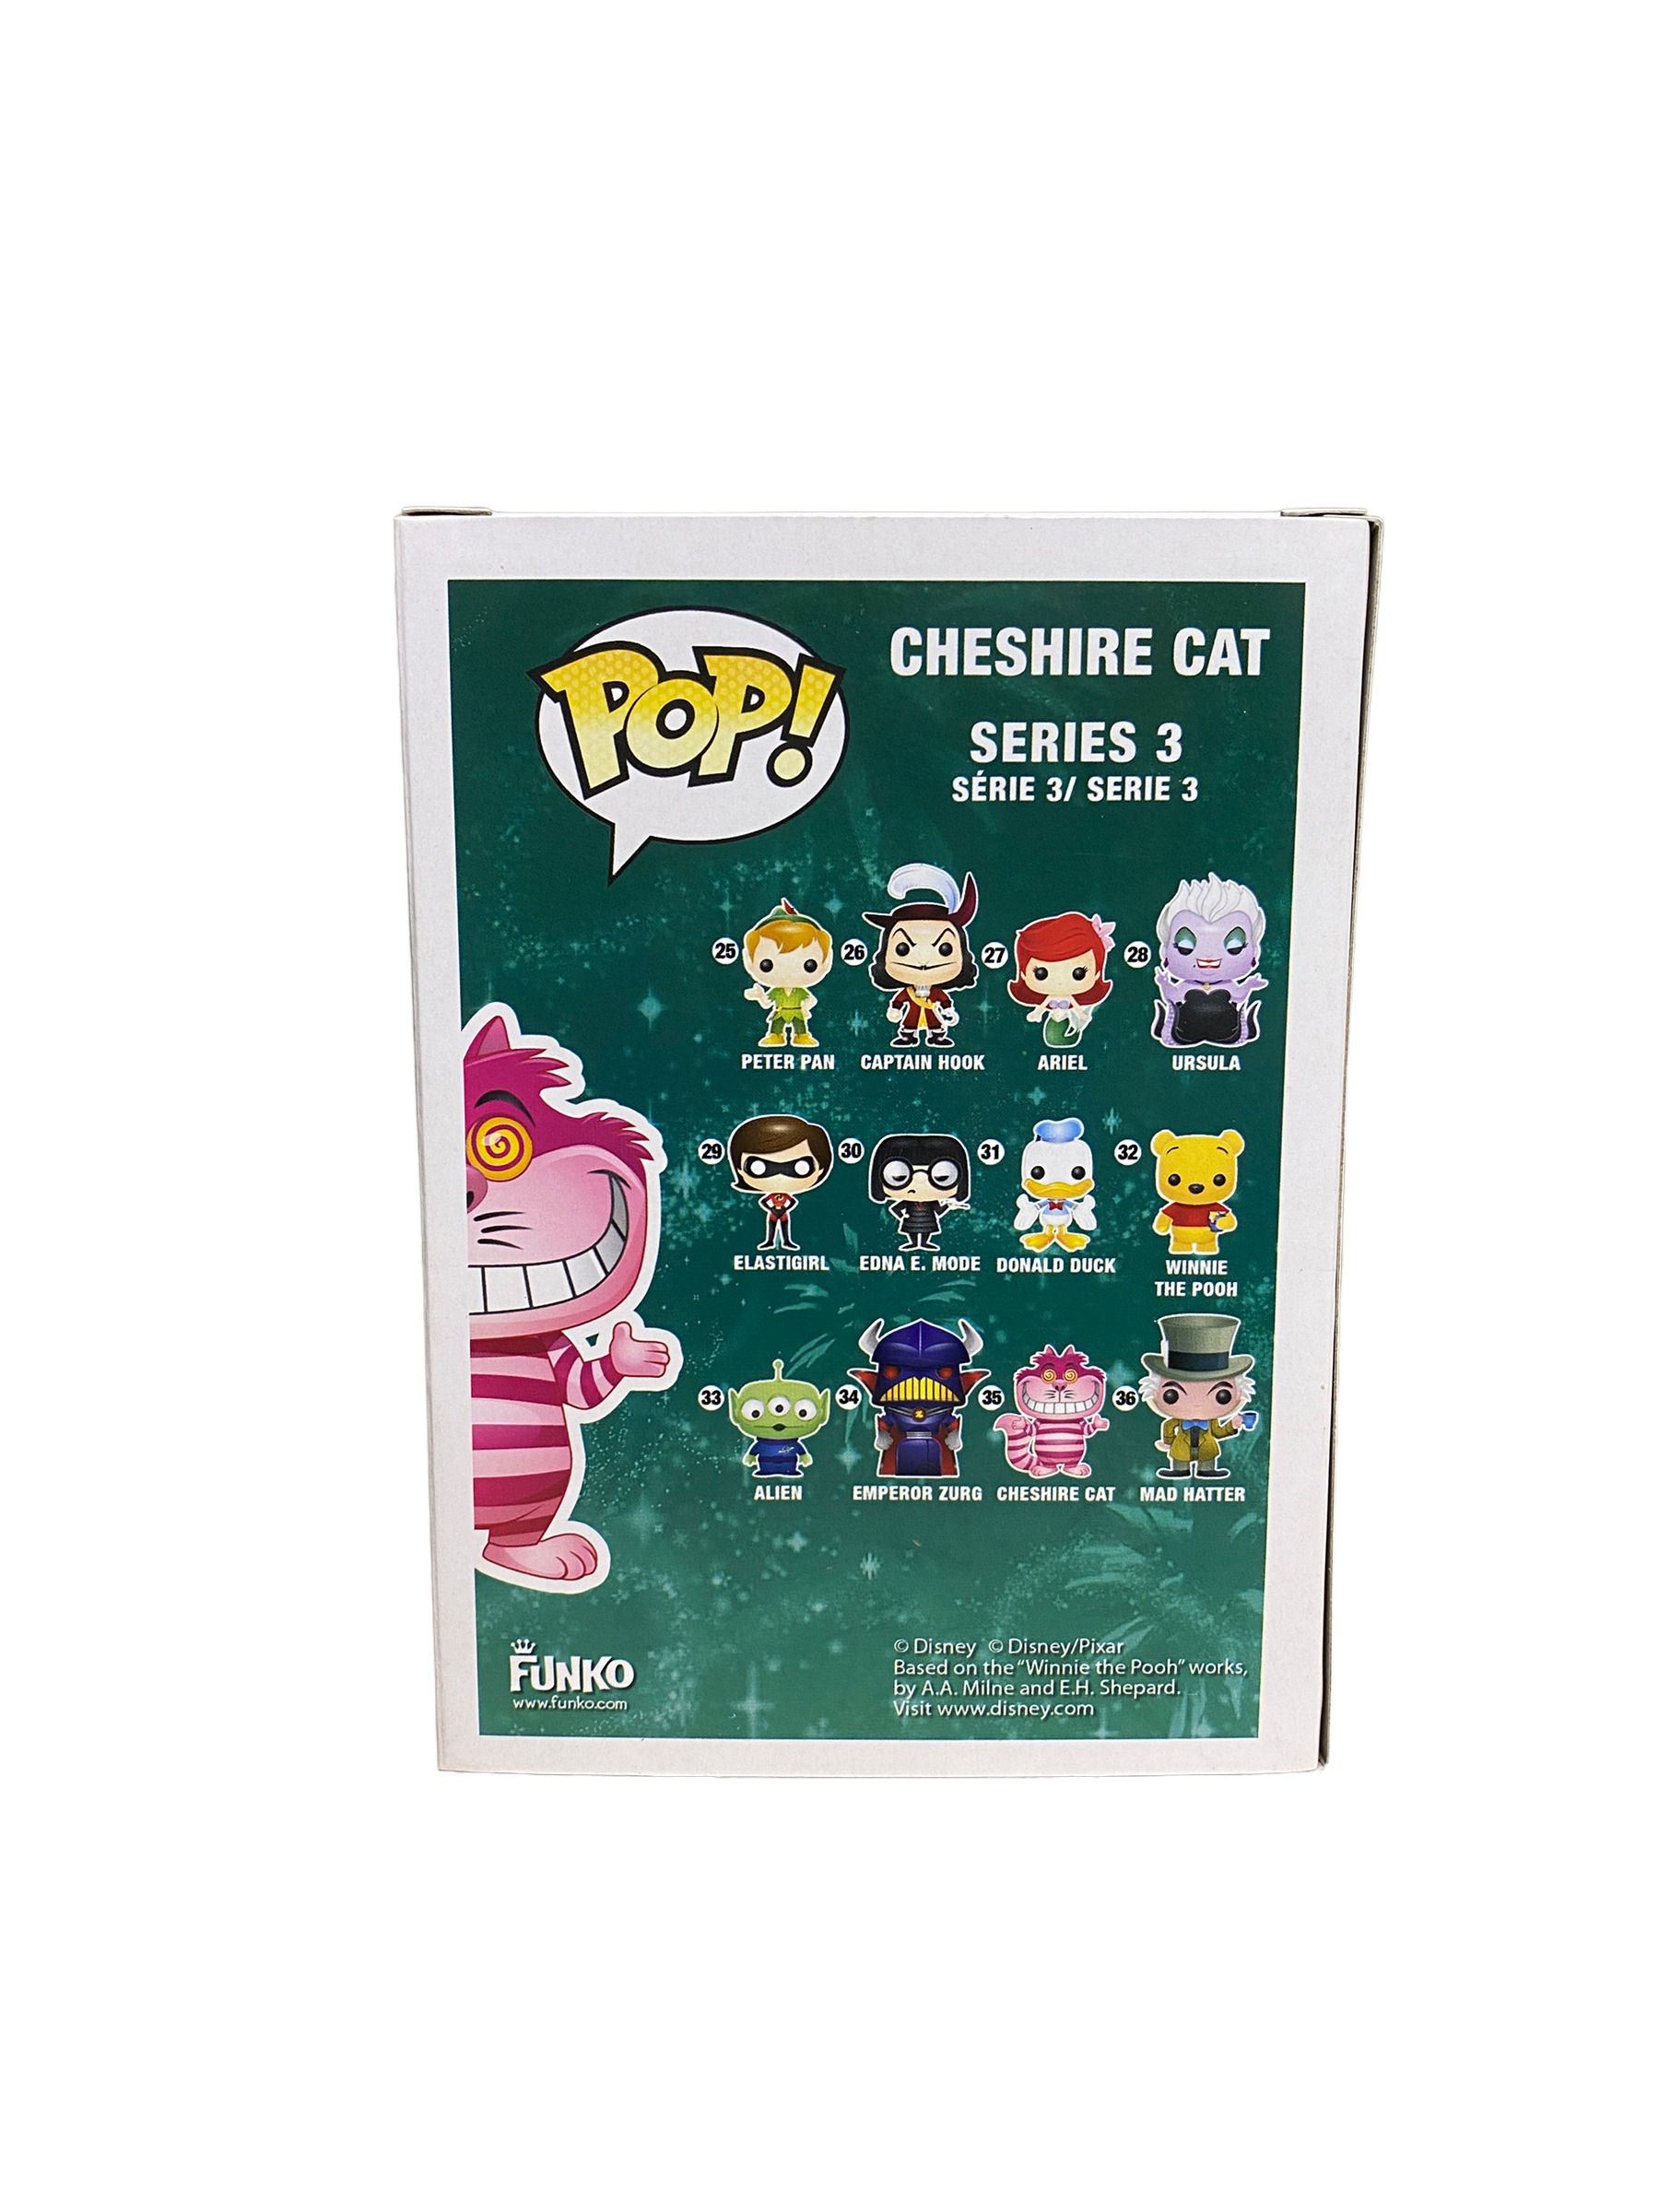 Cheshire Cat #35 (Fading) Funko Pop! - Disney Series 3 - Hot Topic Exclusive - Condition 8.5/10